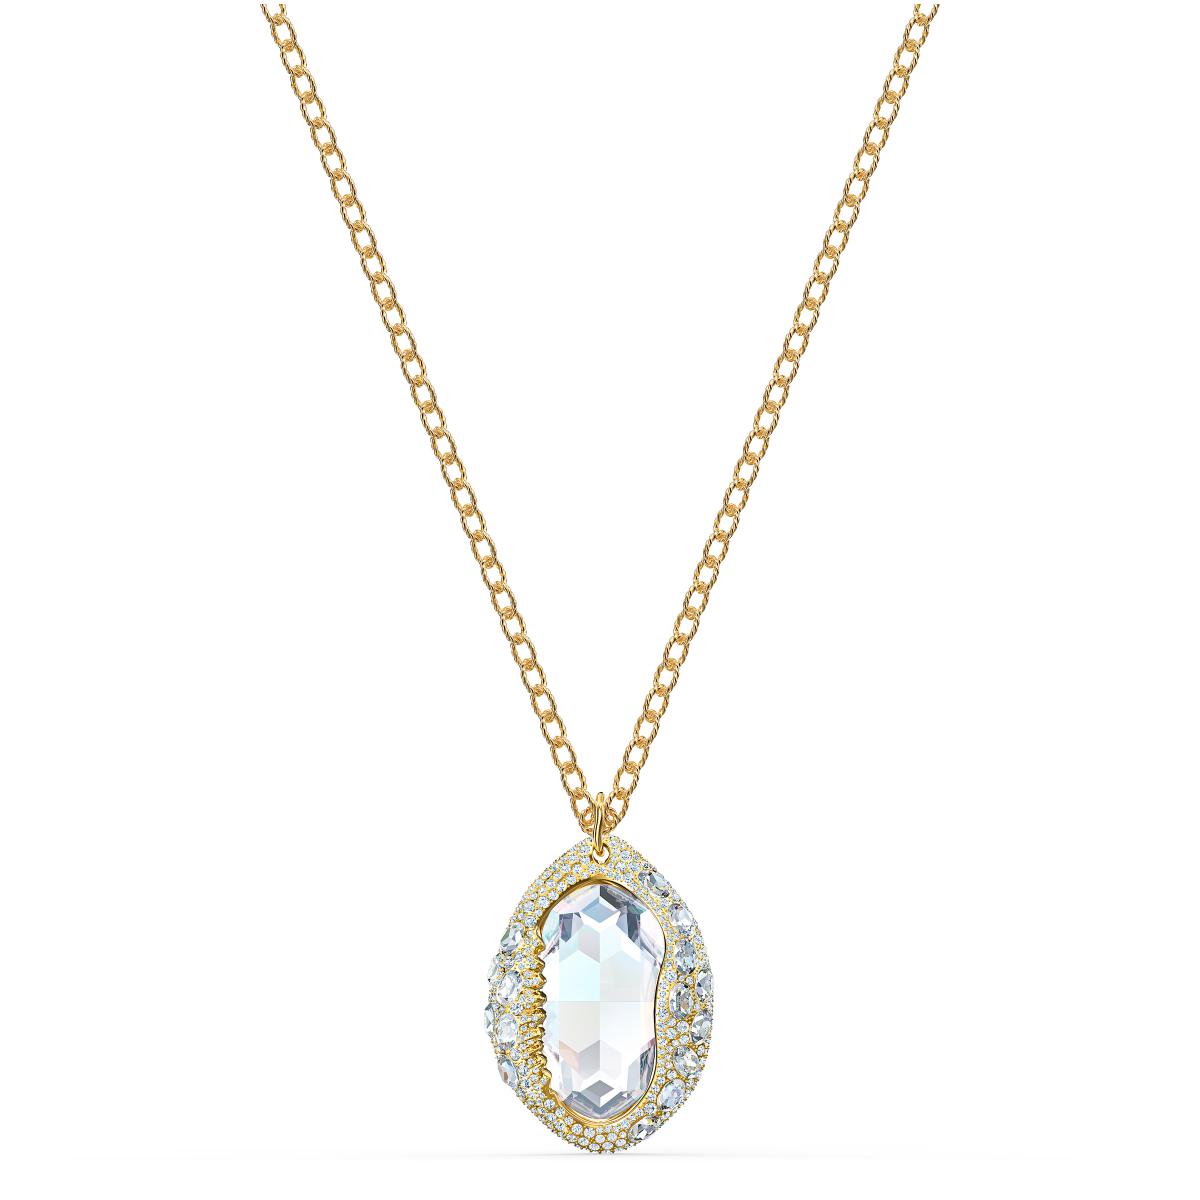 Promo : Collier Swarovski 5520668 - Collier métal rhodié or chaine cristal blanc Femme